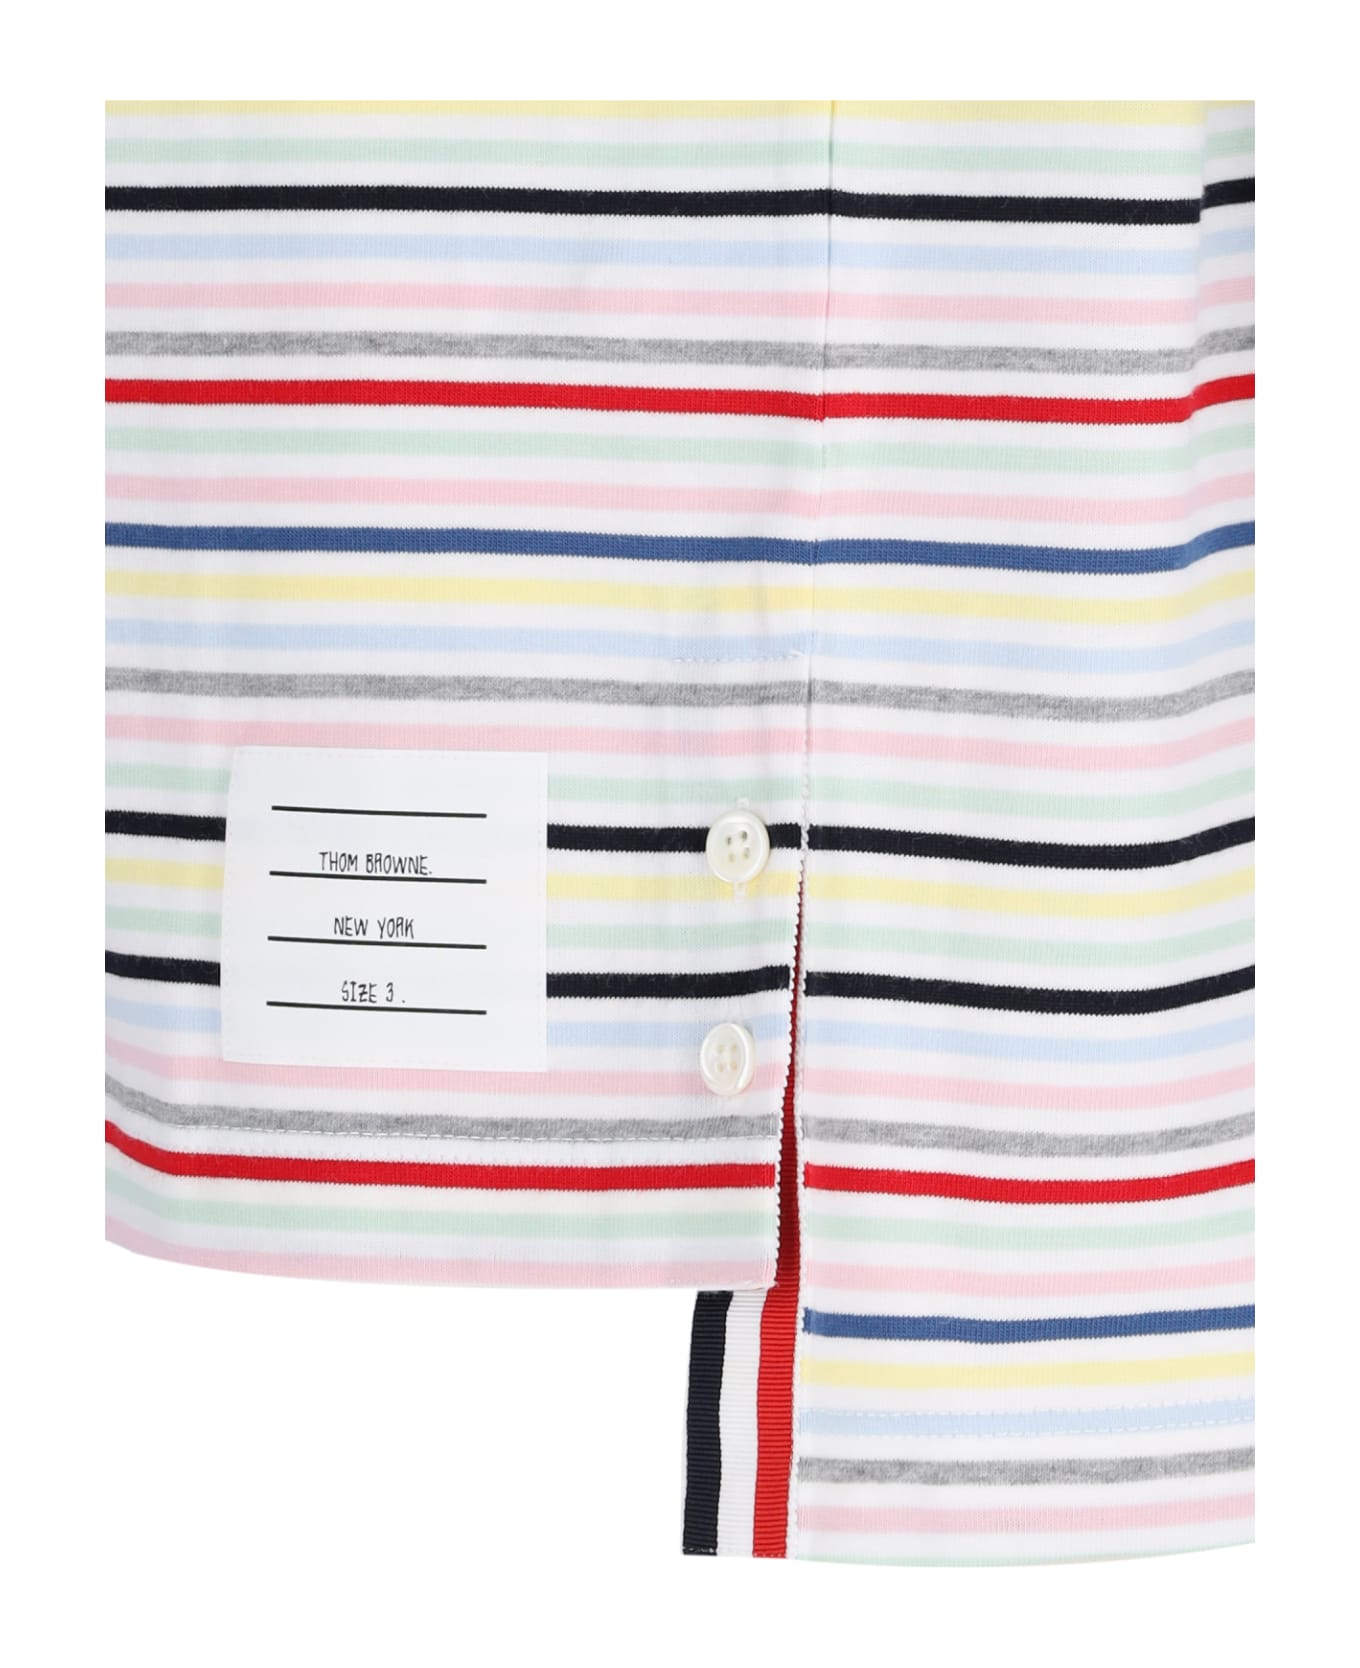 Thom Browne Striped Cotton T-shirt - Multicolor シャツ